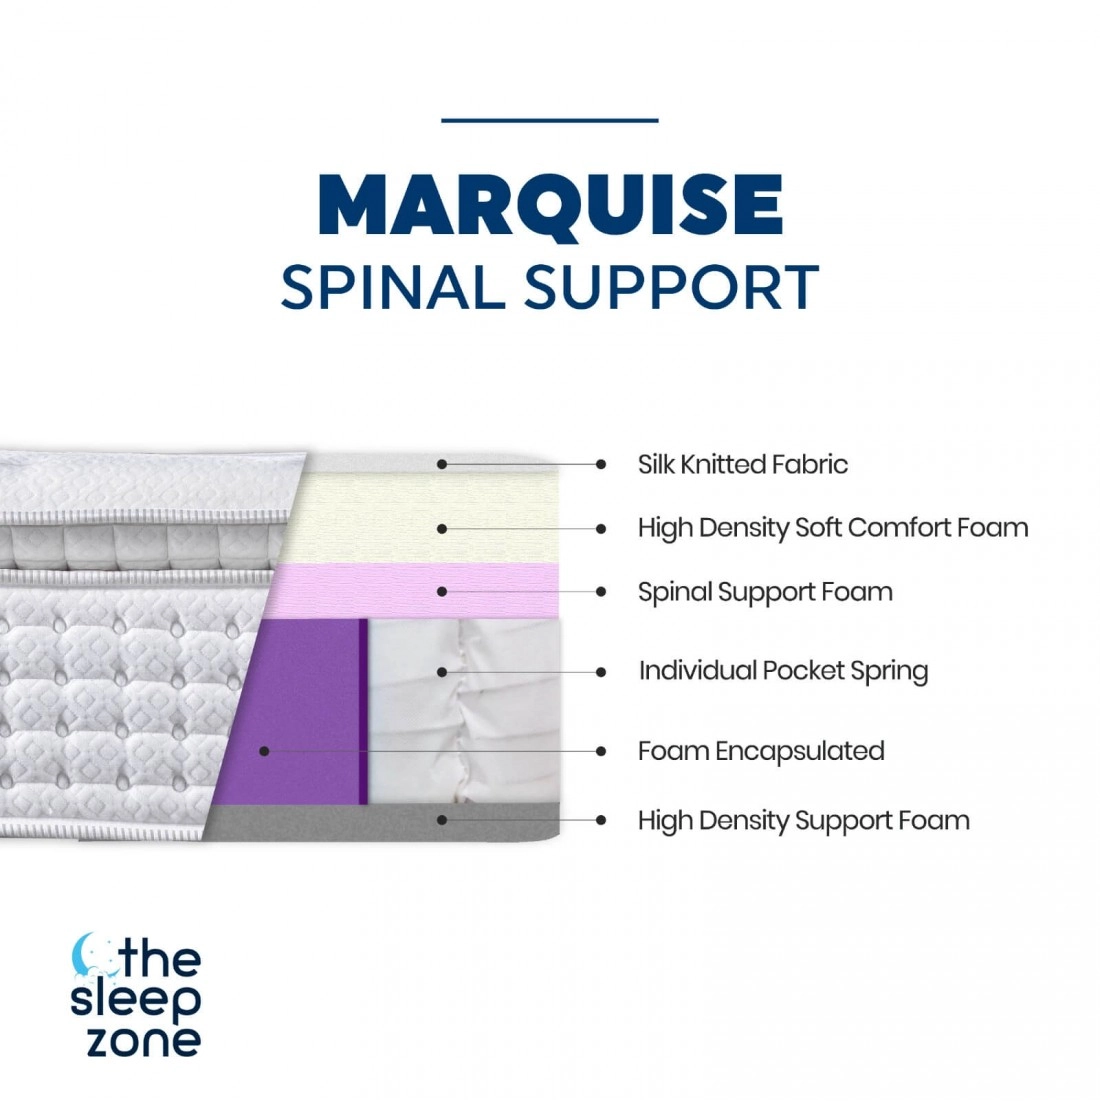 mdmss46-sleep-zone-4-6-marquise-spinal-support-mattress (2)